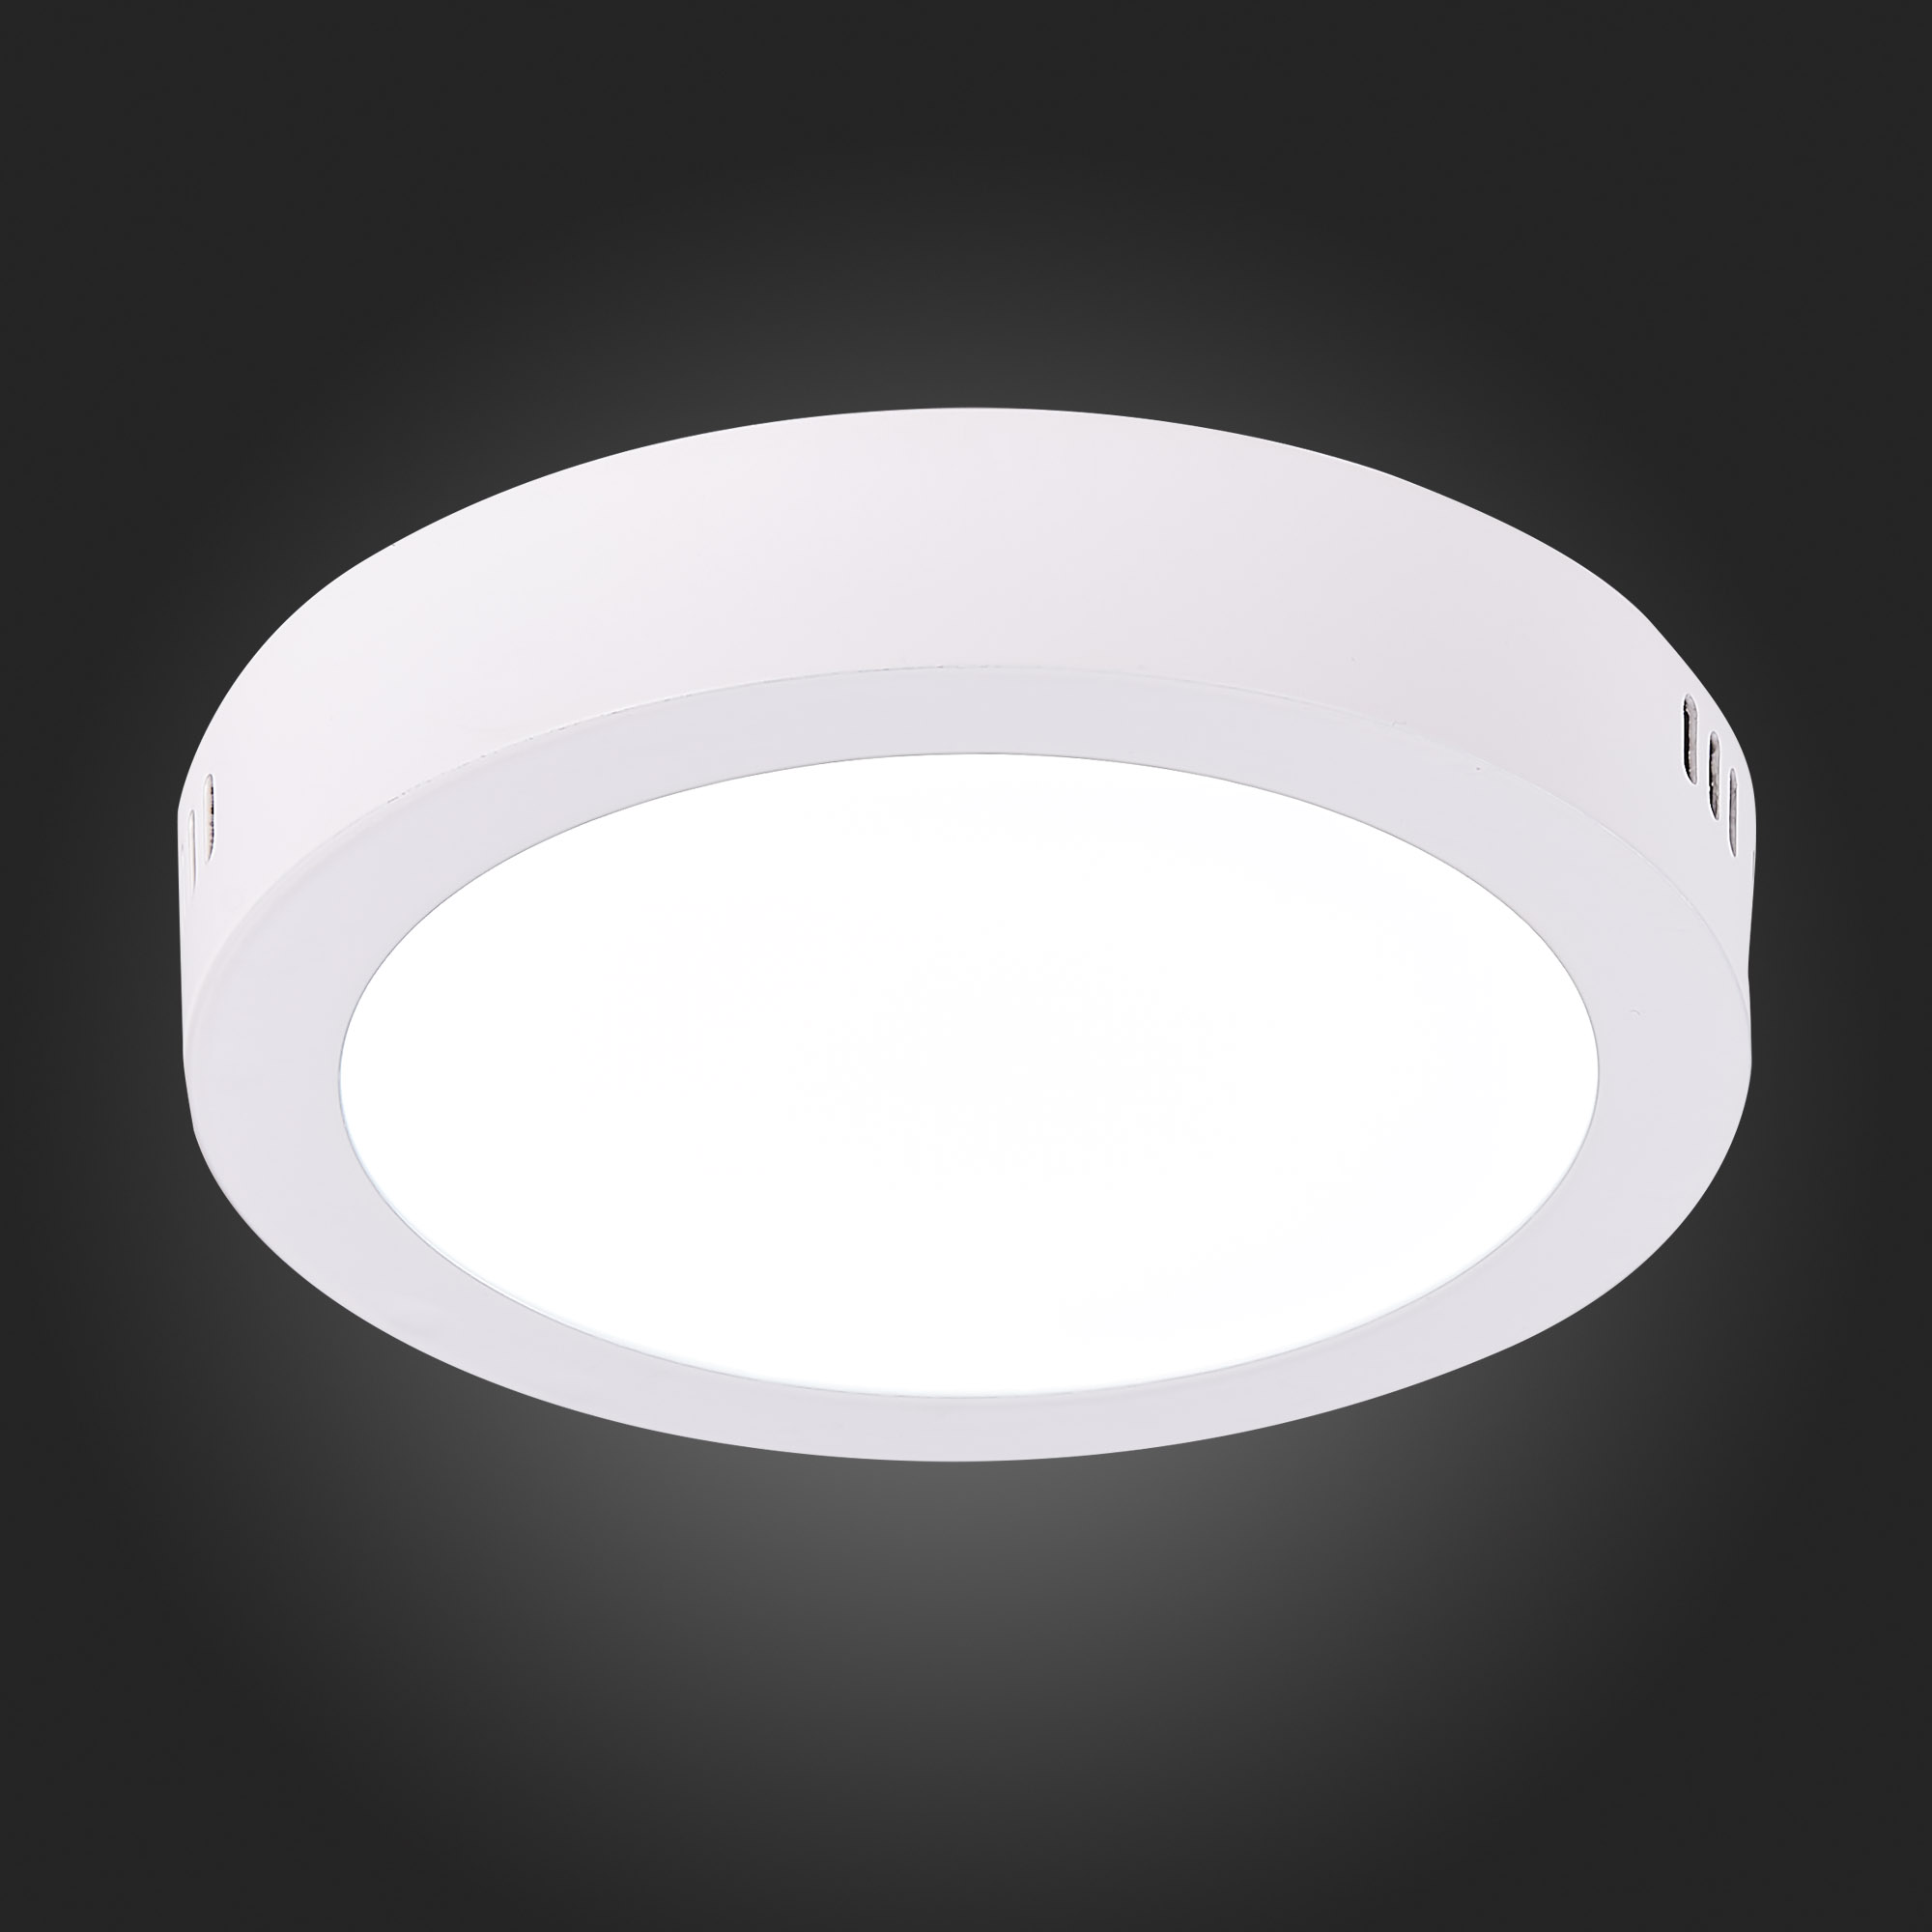 светильник настенно-потолочный st luce st112.532.12, артикул ST112.532.12